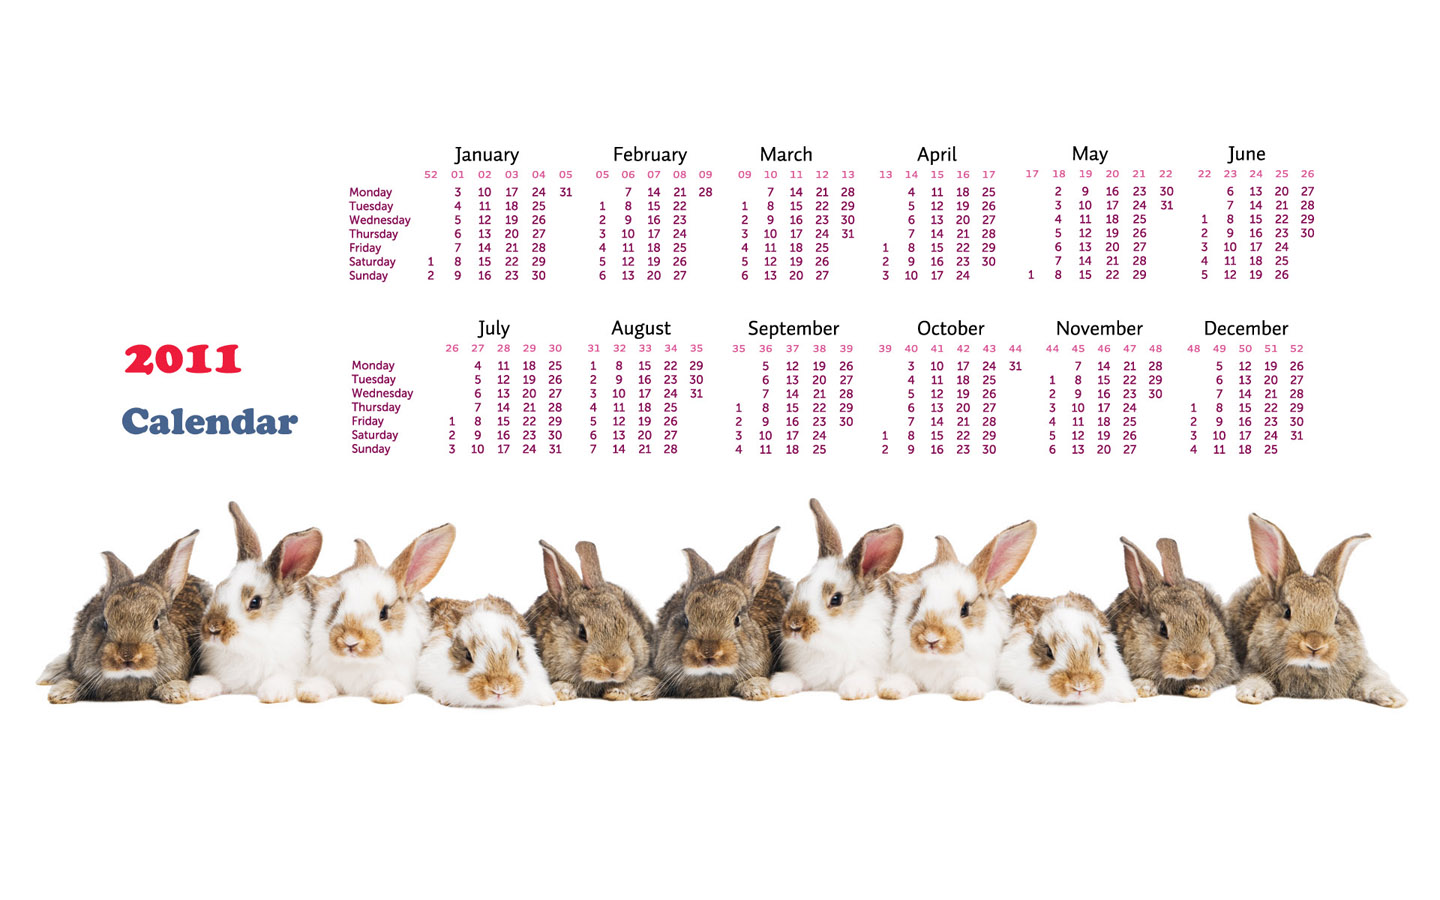 2011 Year of the Rabbit Calendar Desktop Wallpaper